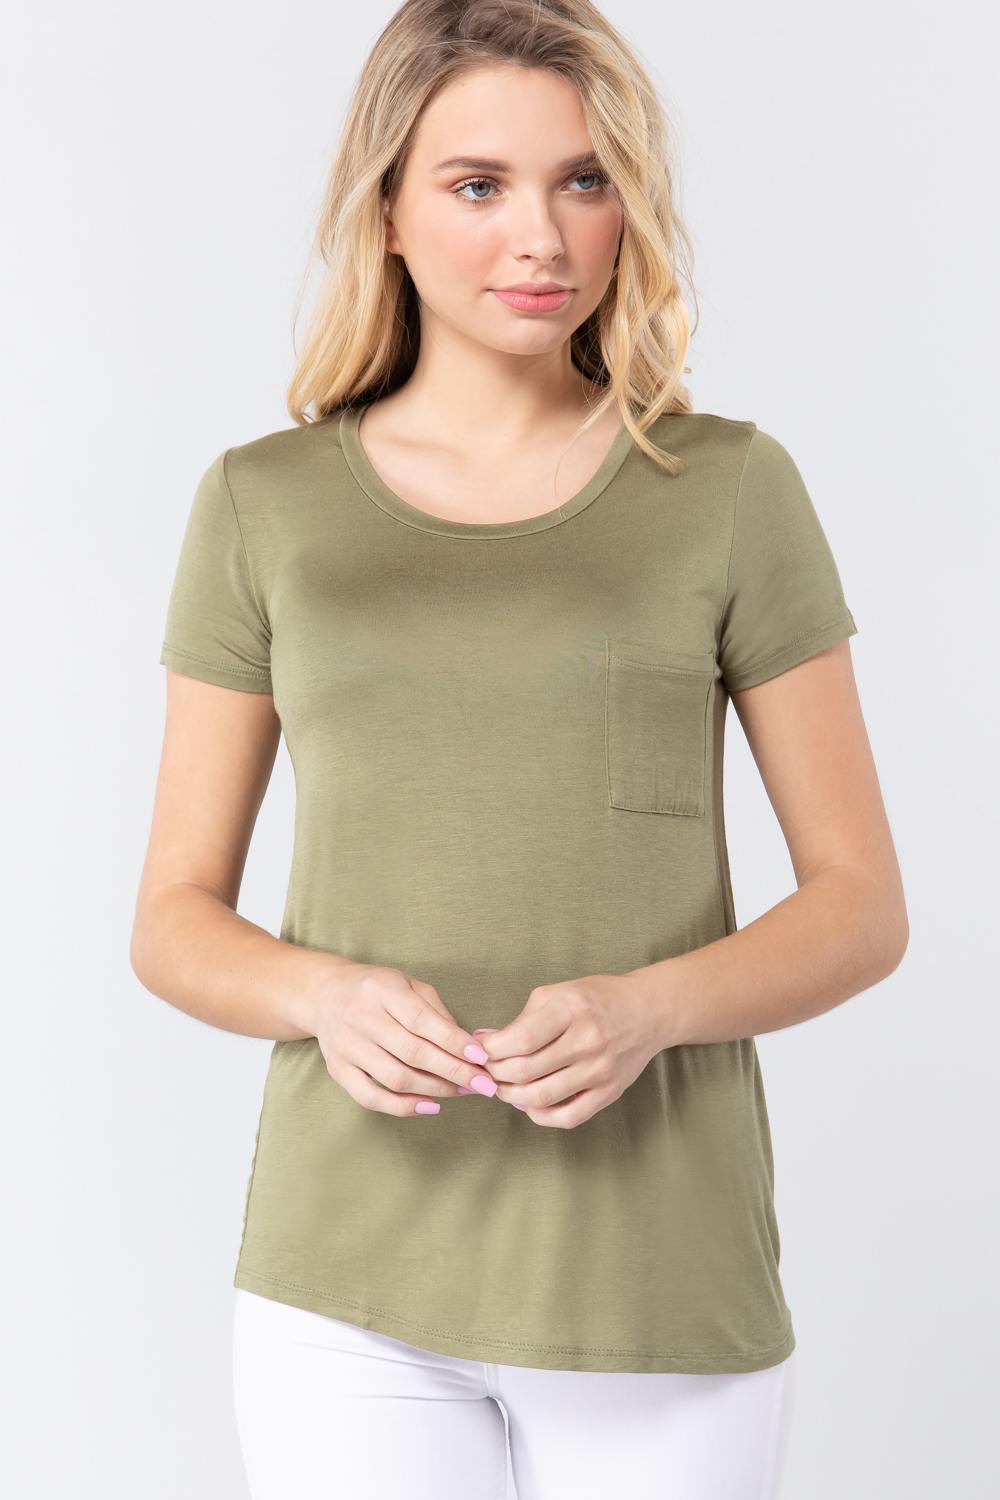 Green Short Sleeve Scoop Neck Top With Pocket